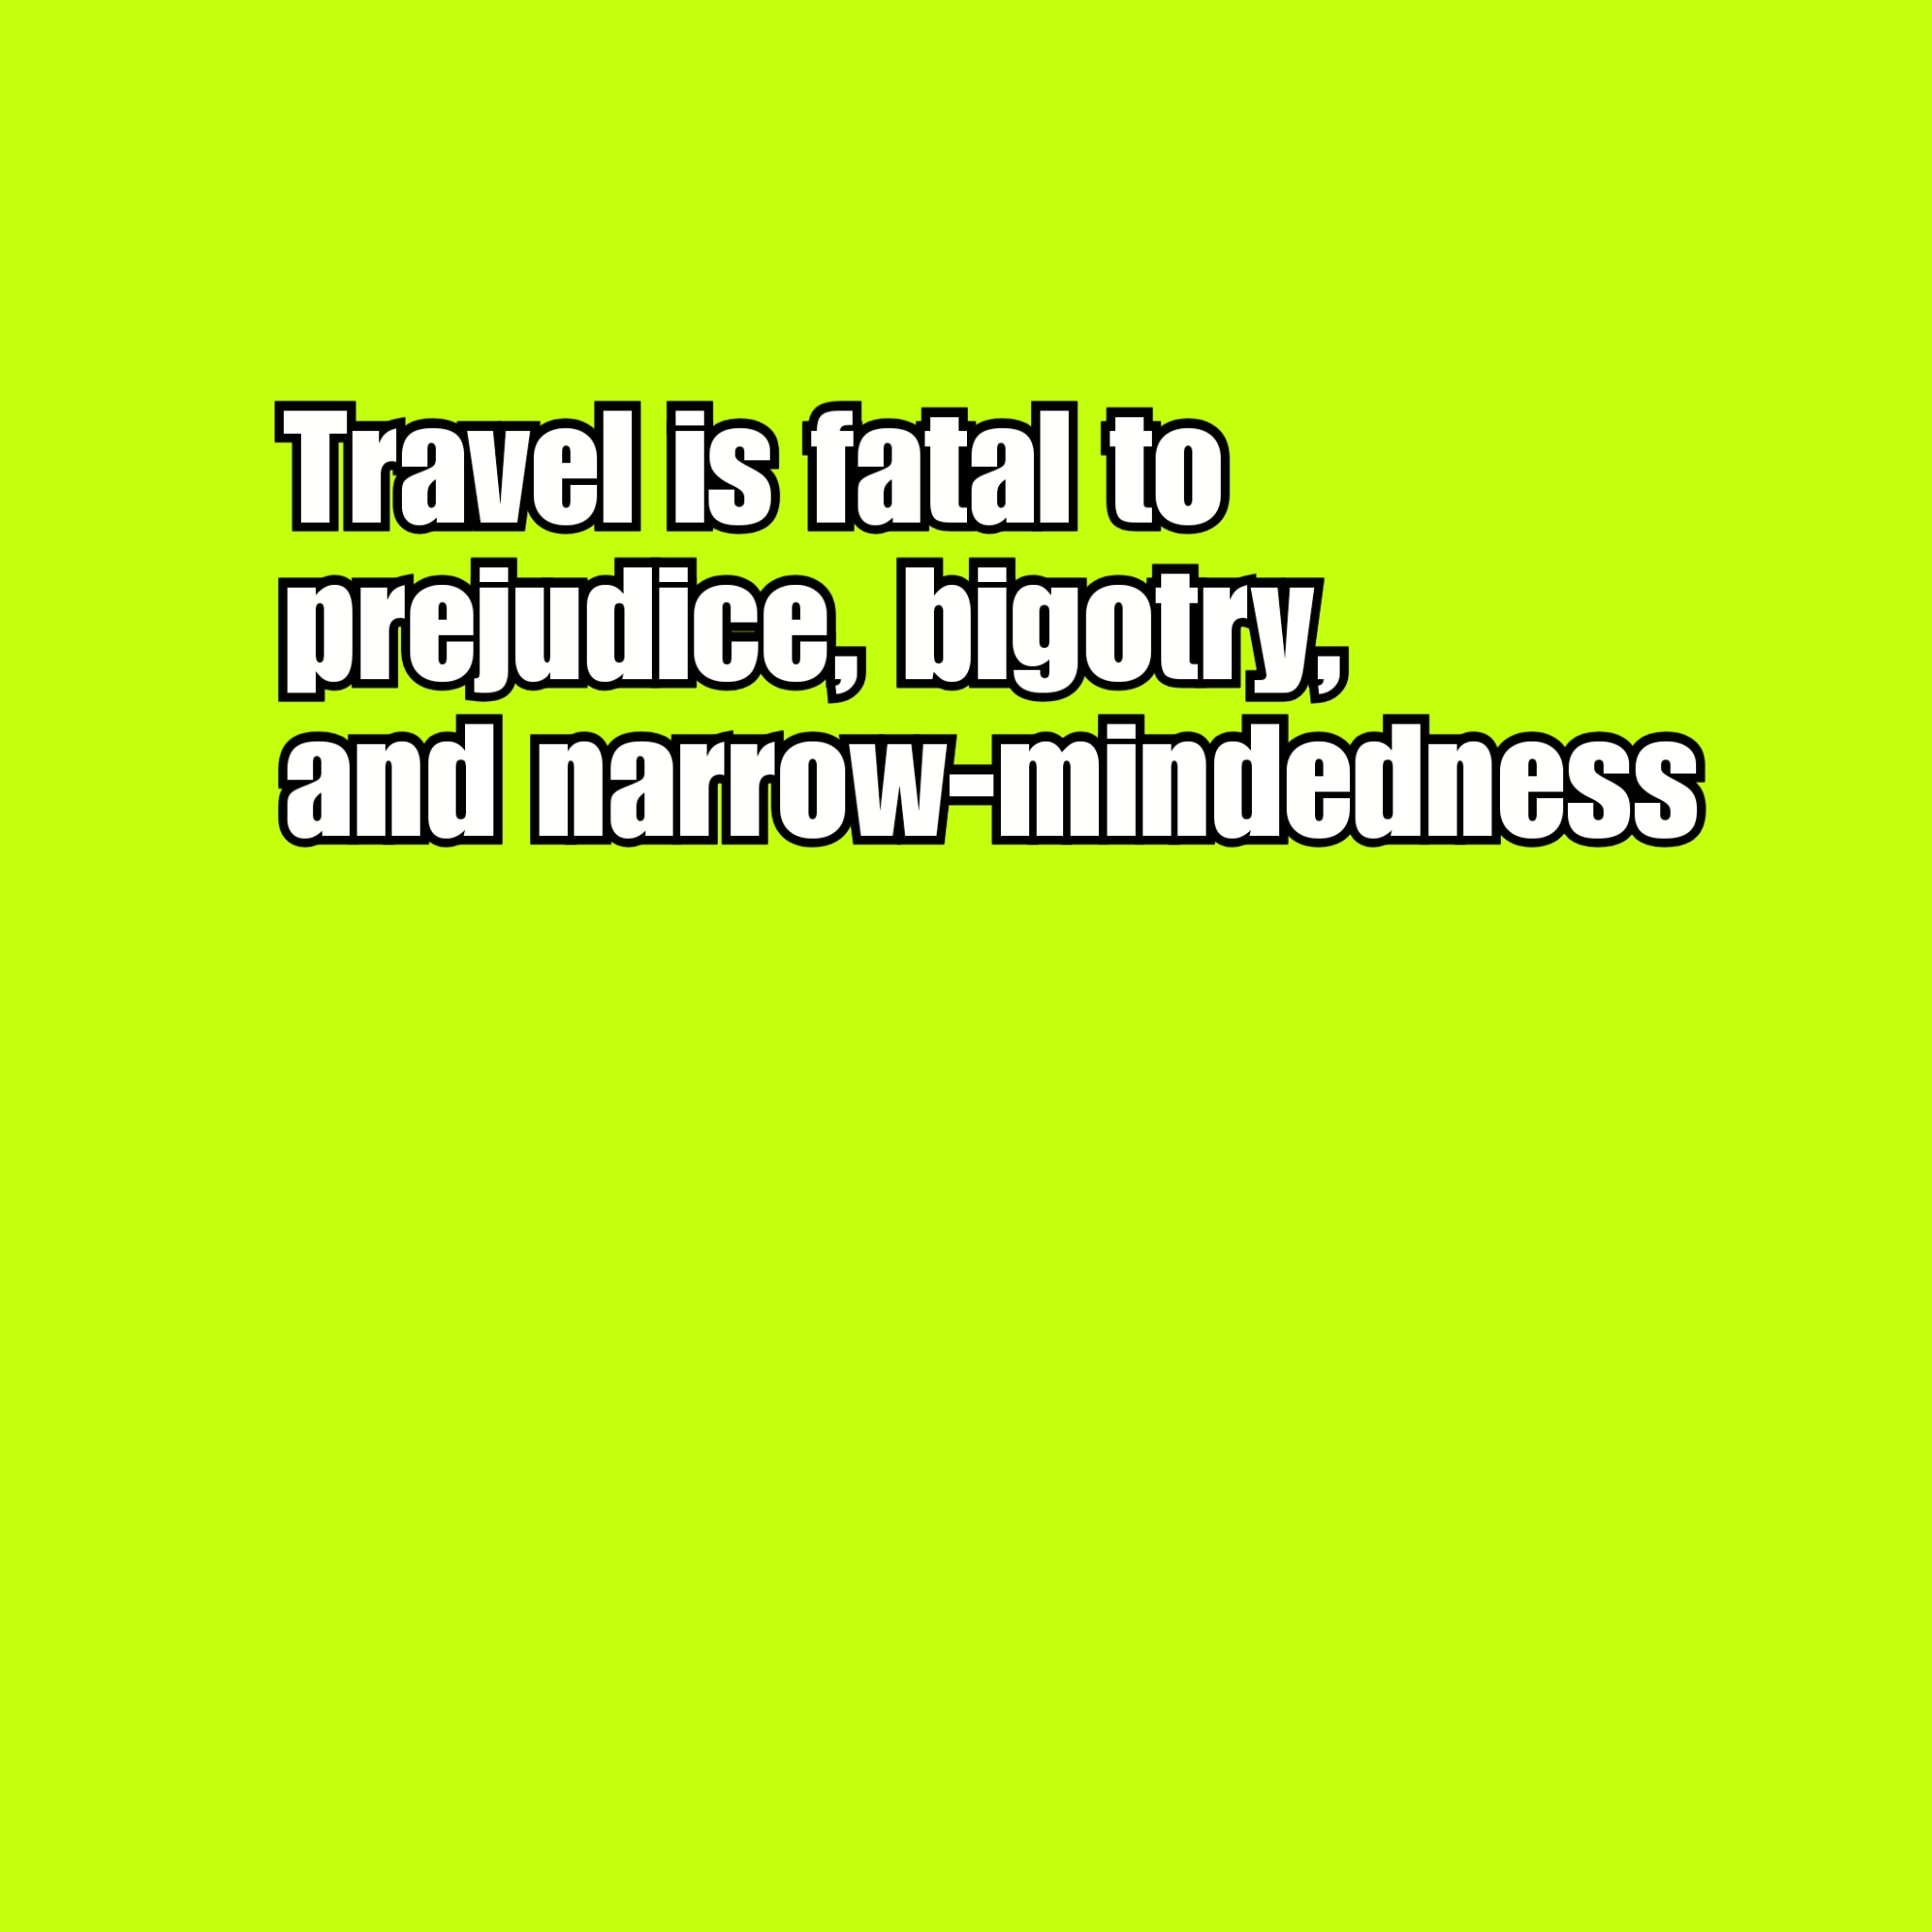 Let travel beats prejudice, bigotry, and narrow-mindedness after Covid-19